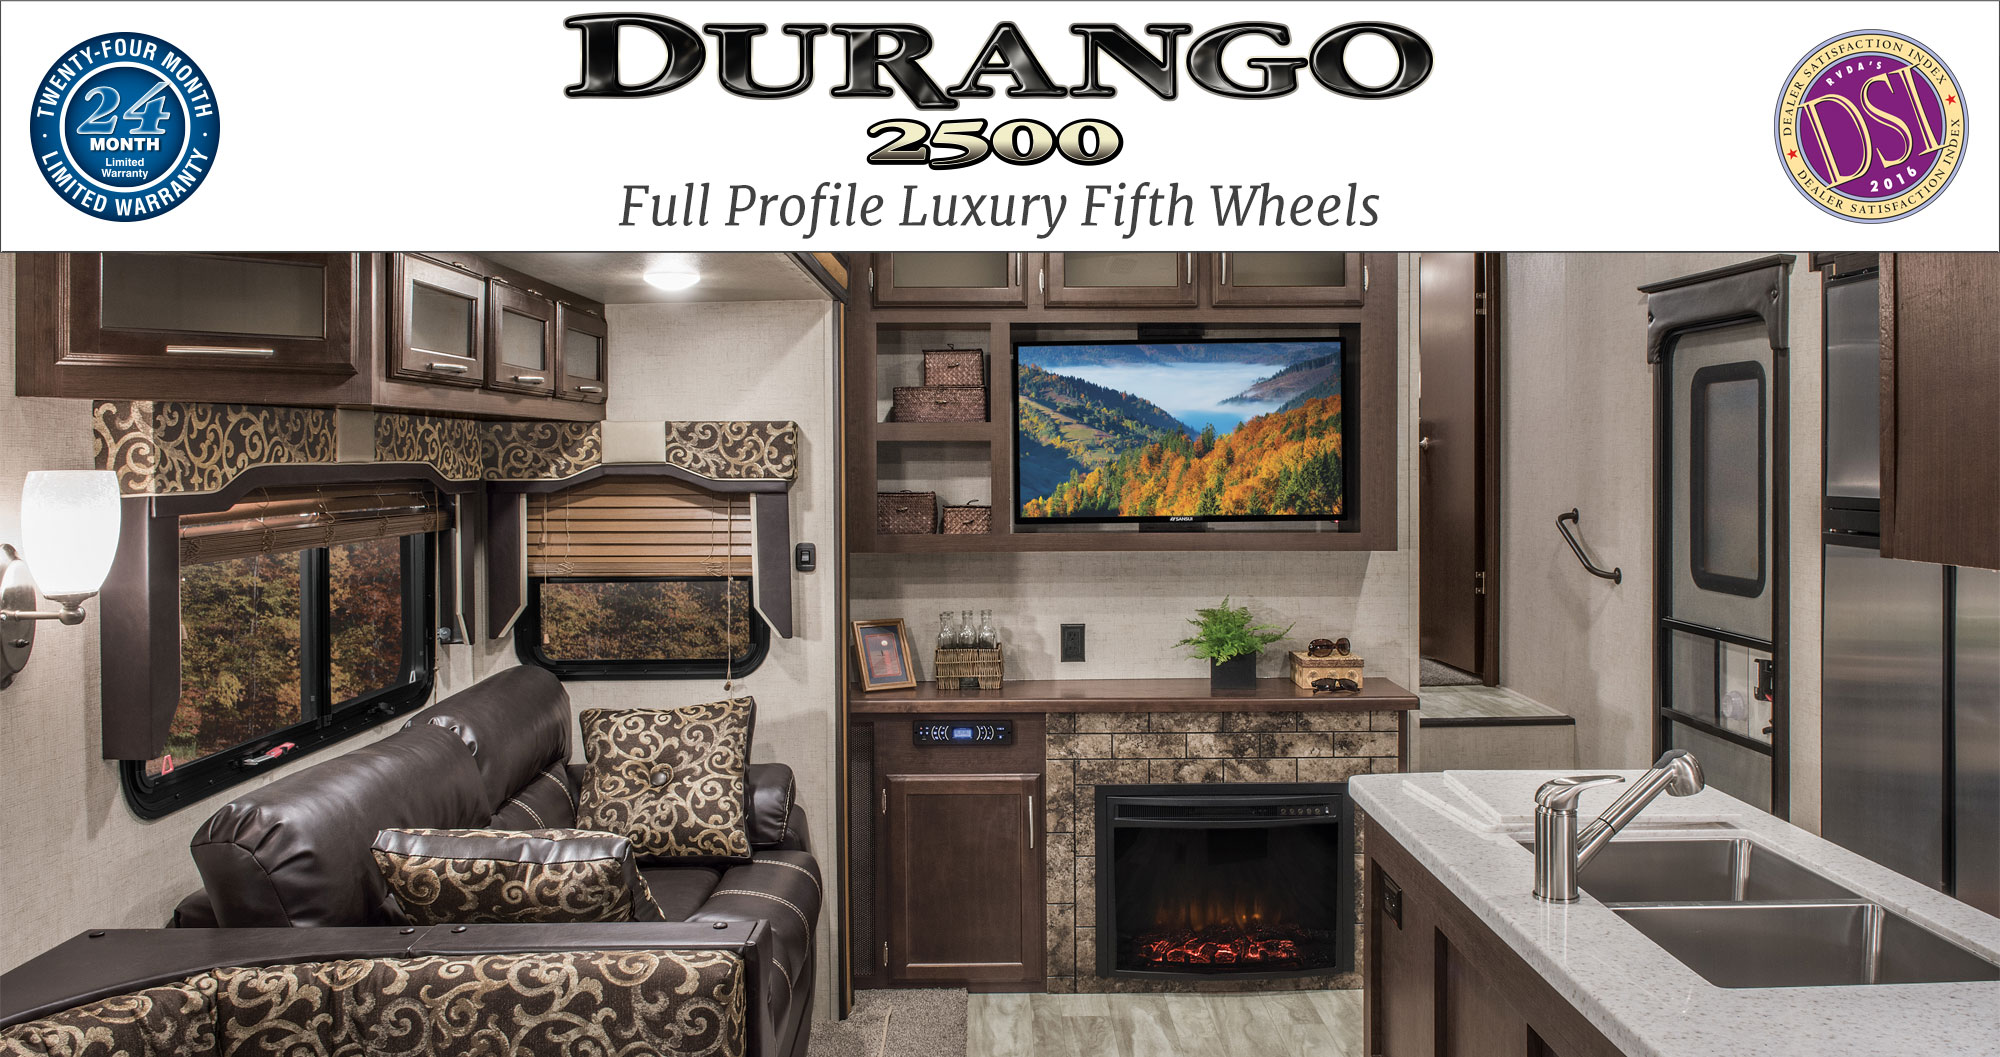 KZ RV Durango 2500 Full Profile Luxury Fifth Wheels